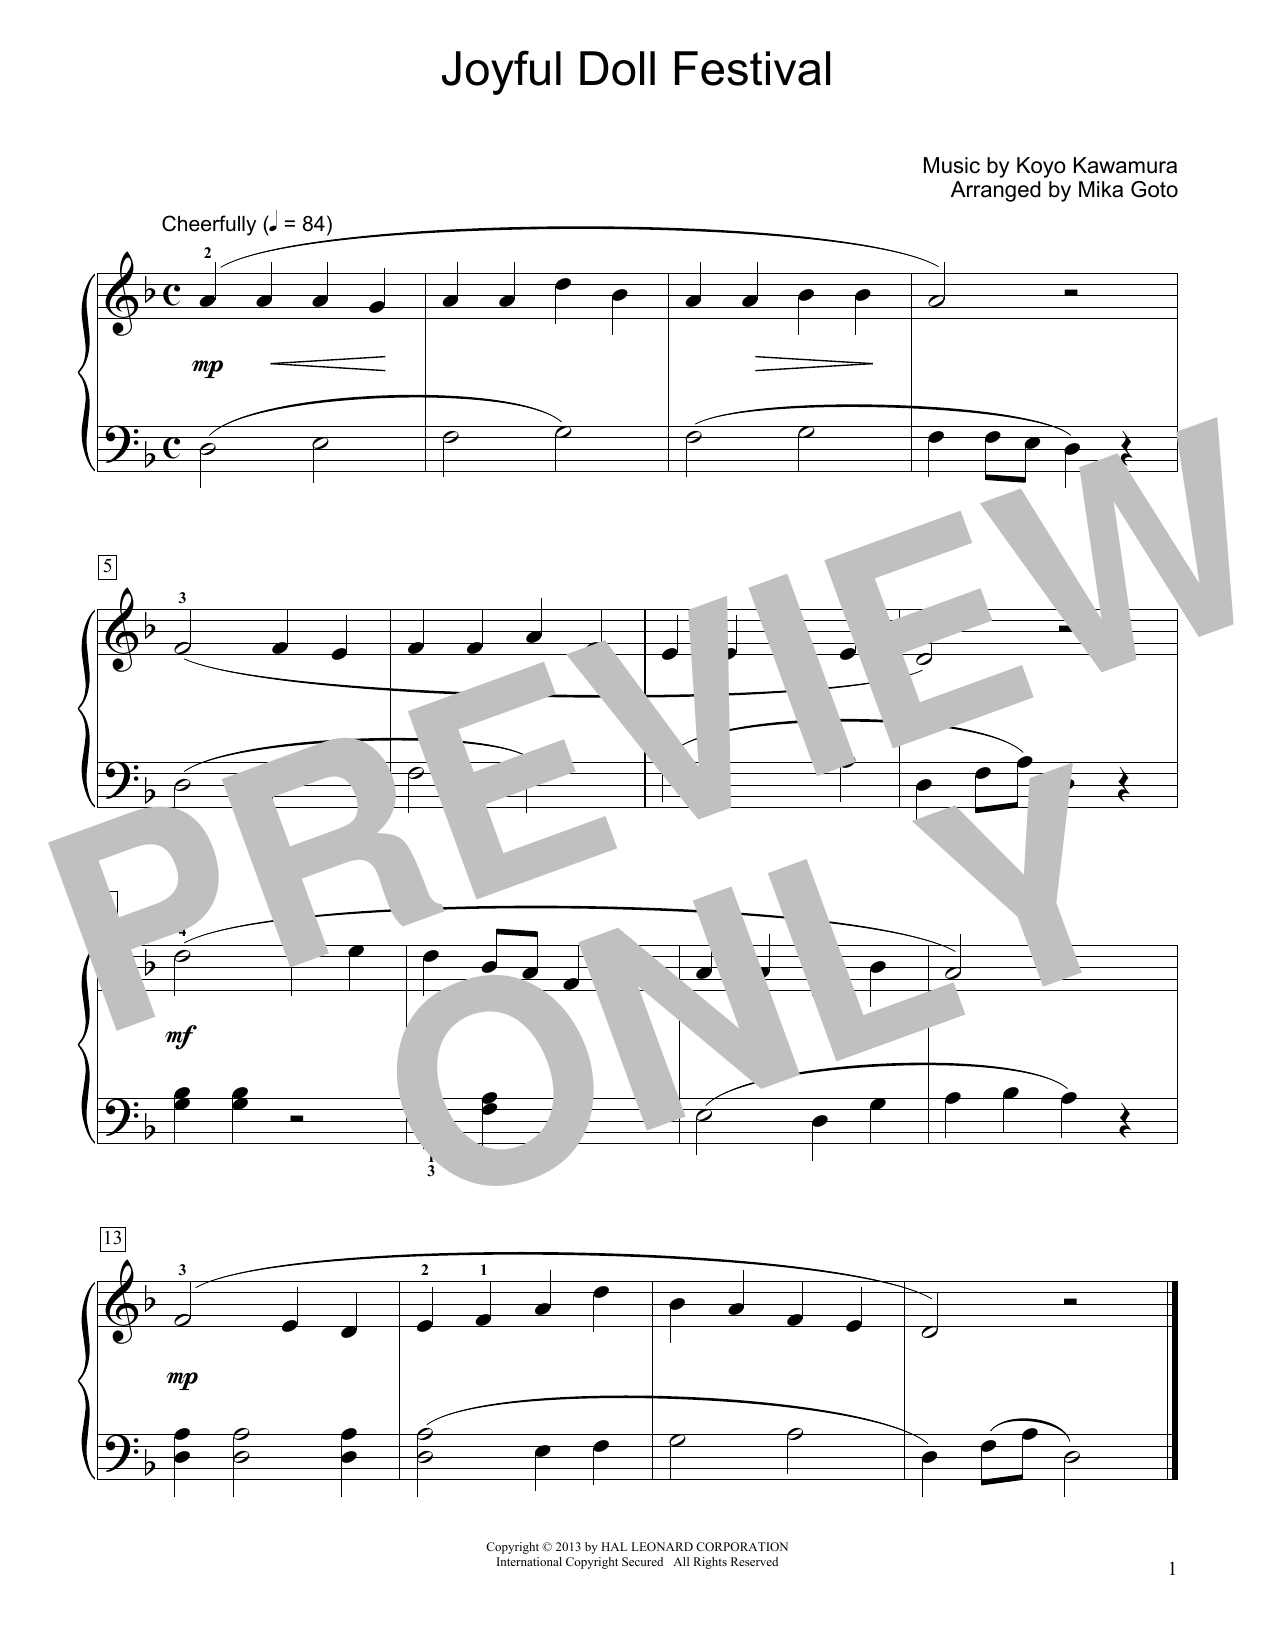 Download Koyo Kawamura Joyful Doll Festival (arr. Mika Goto) Sheet Music and learn how to play Educational Piano PDF digital score in minutes